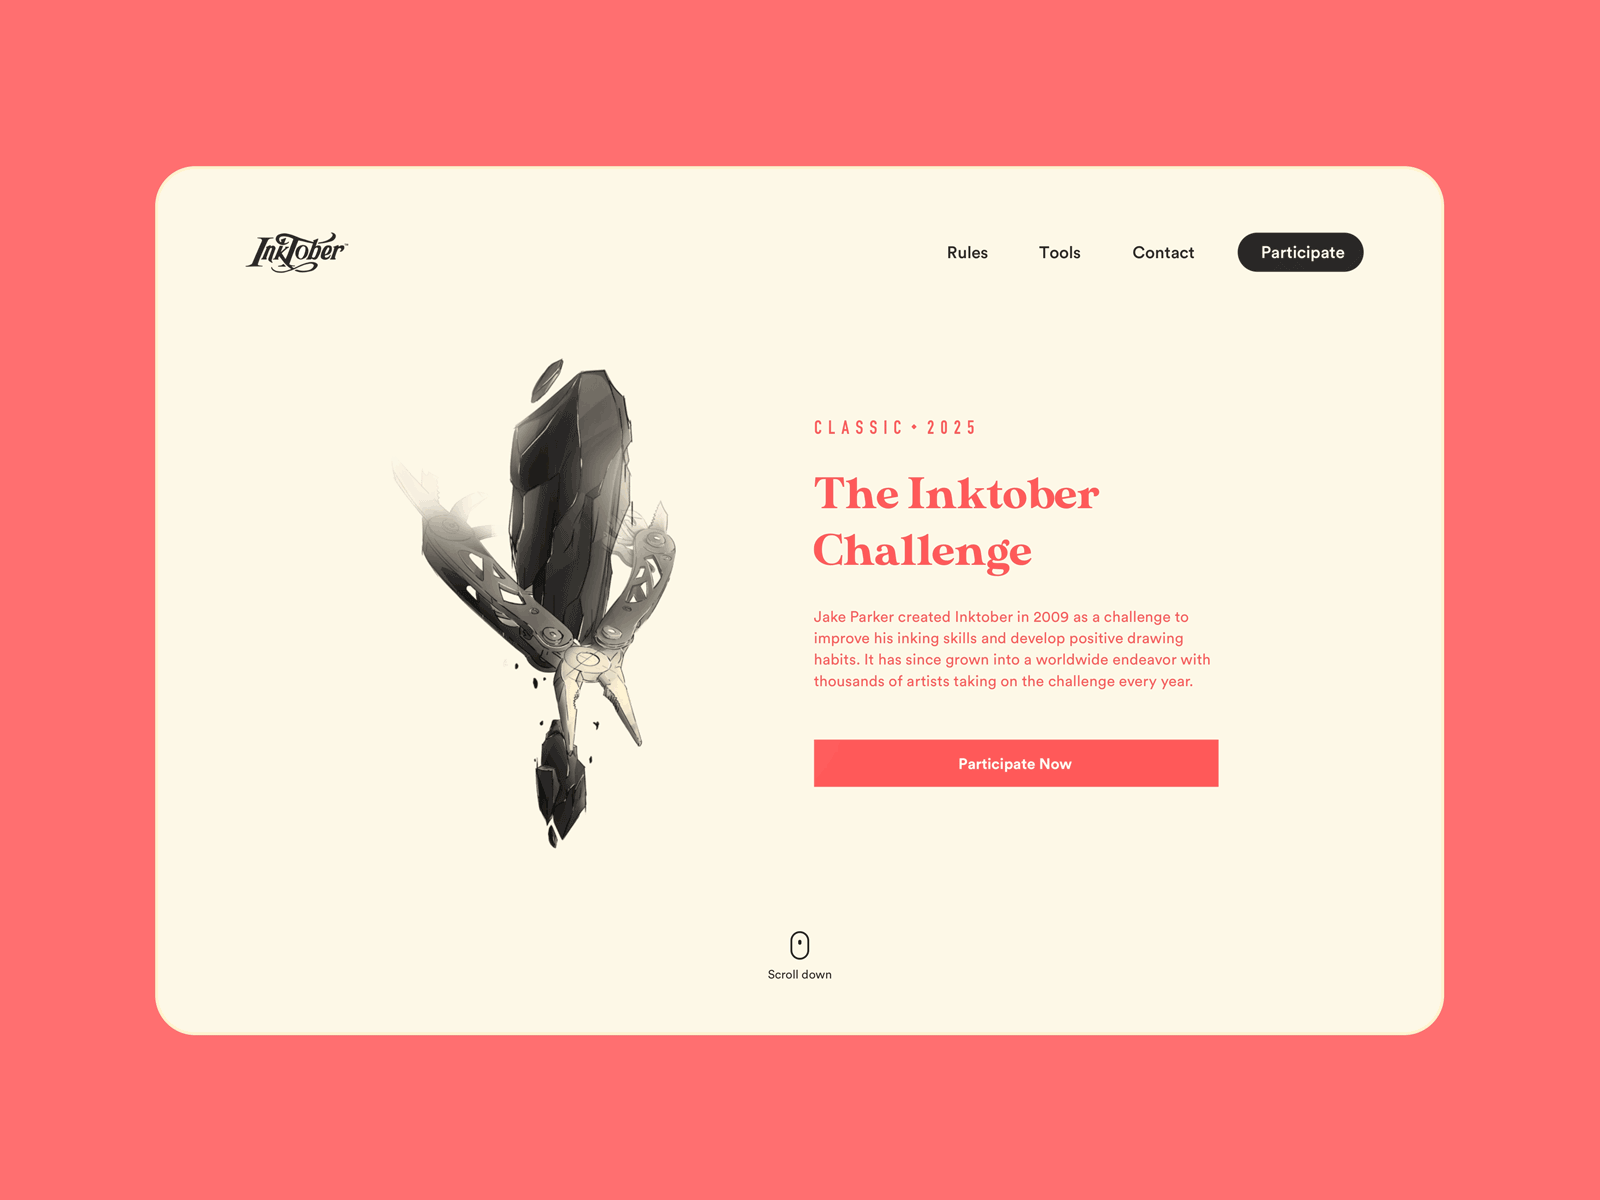 The Inktober Challenge